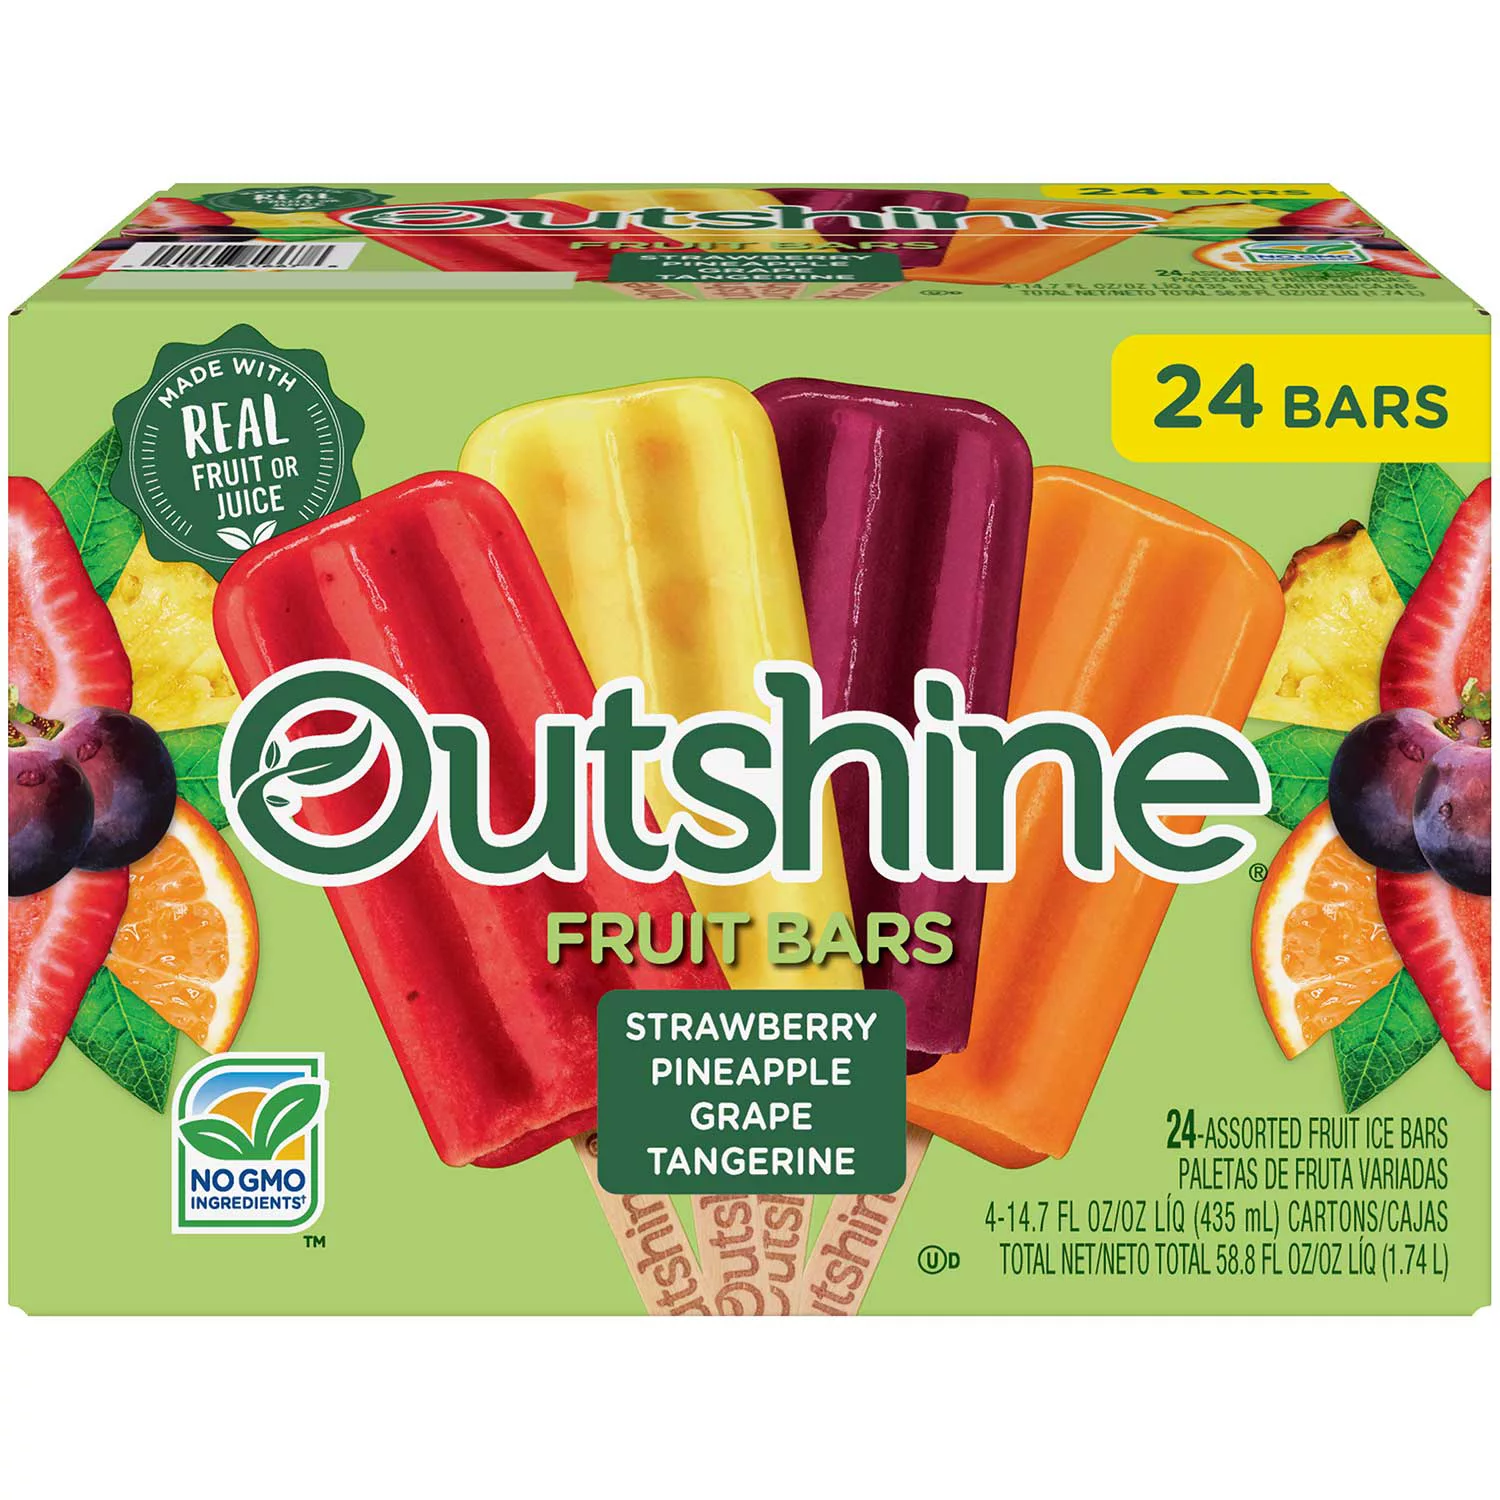 Outshine Fruit Bars 24pk $9.48 at Sam’s